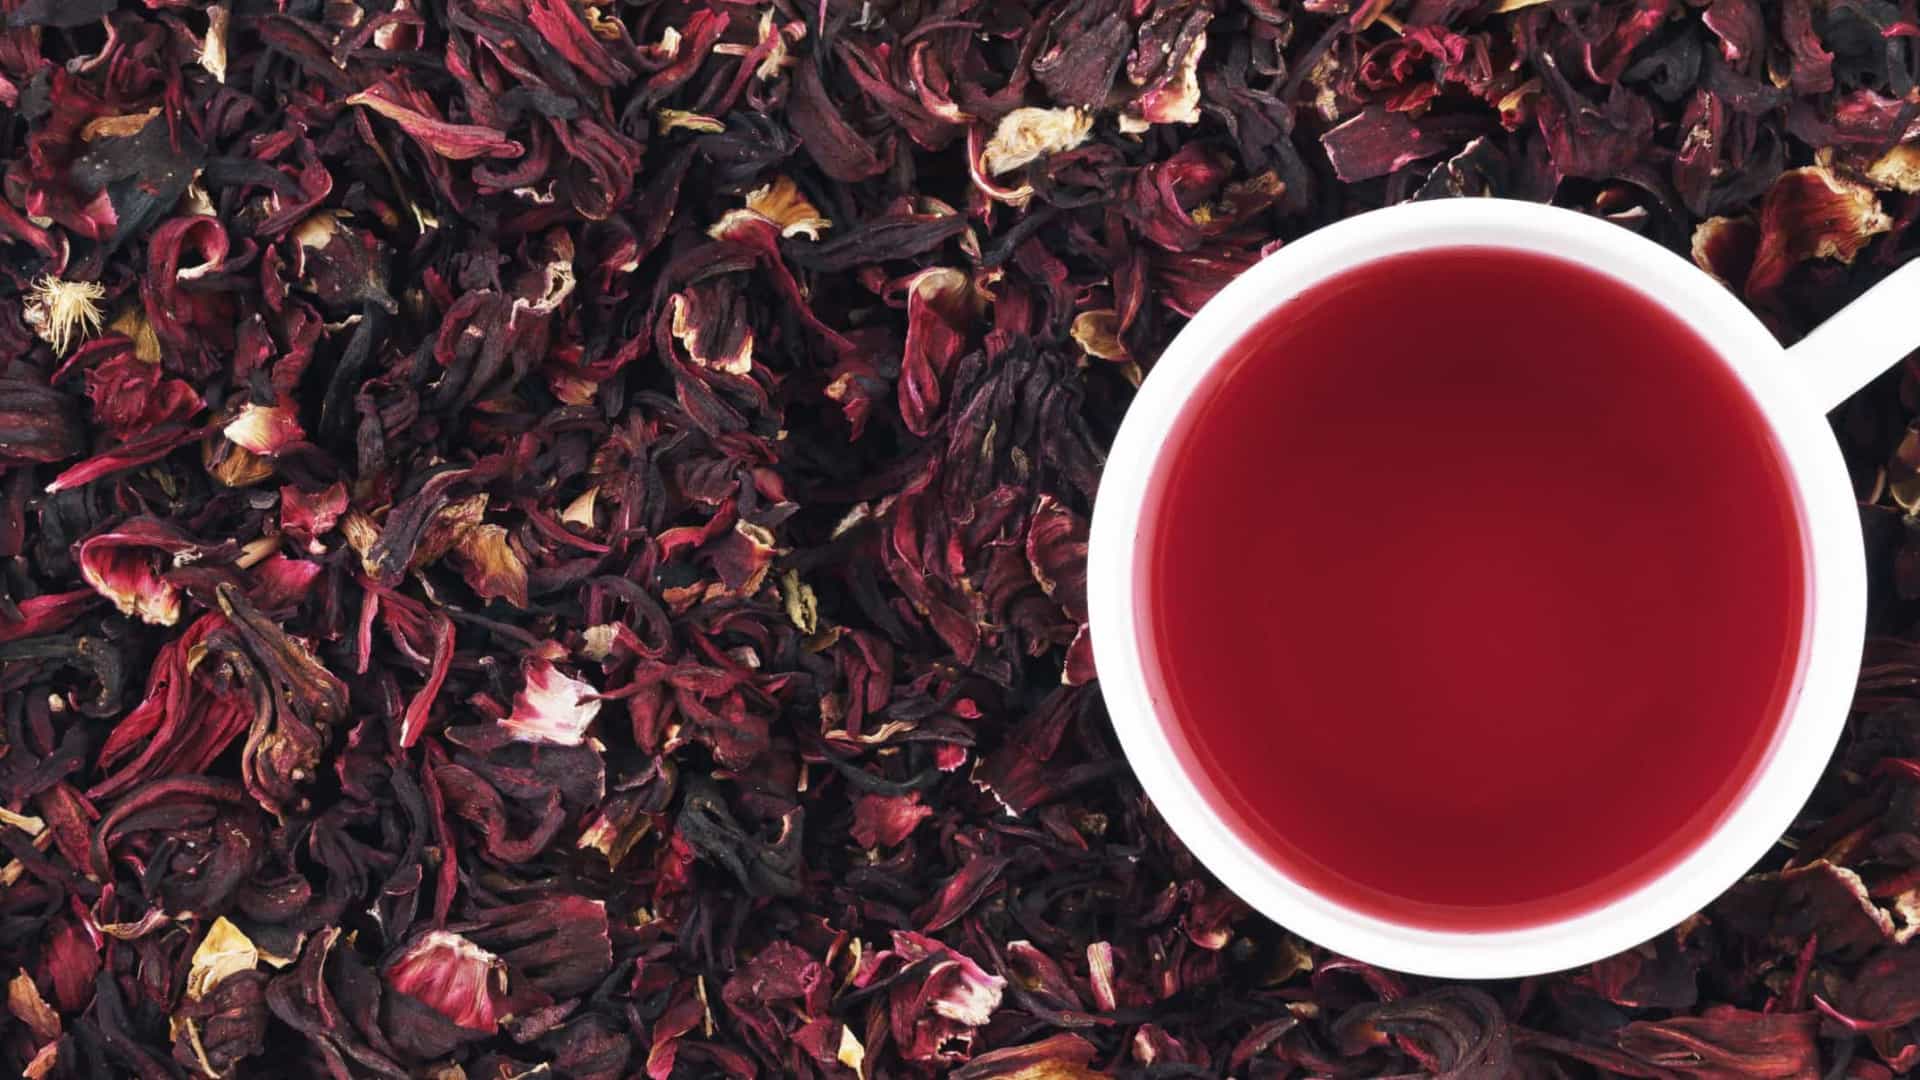 Chá de hibisco, um poço de saúde que pode ser saboreado quente ou gelado